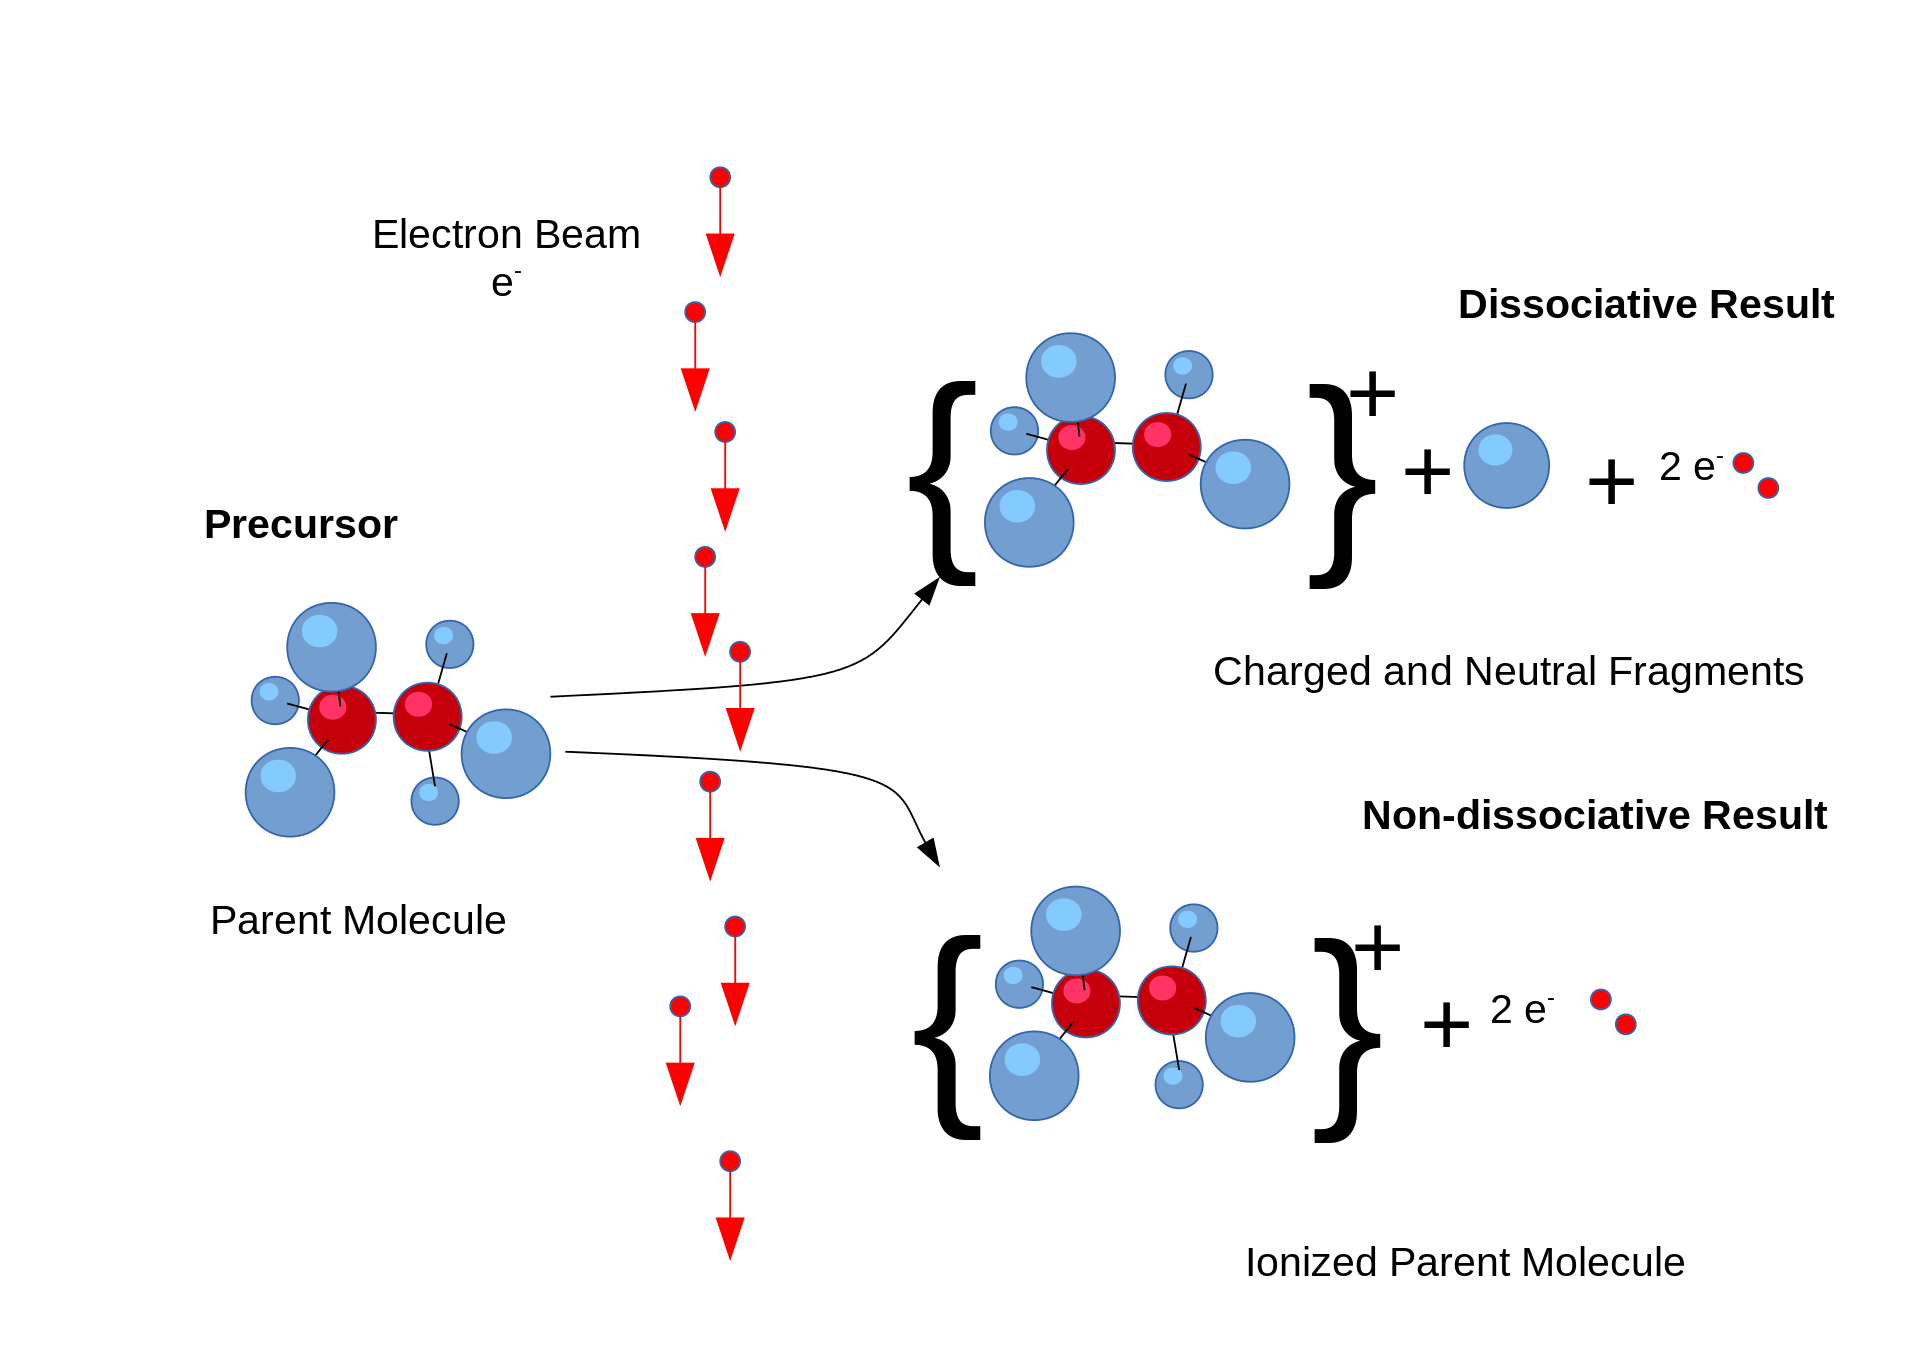 Ionization of molecules